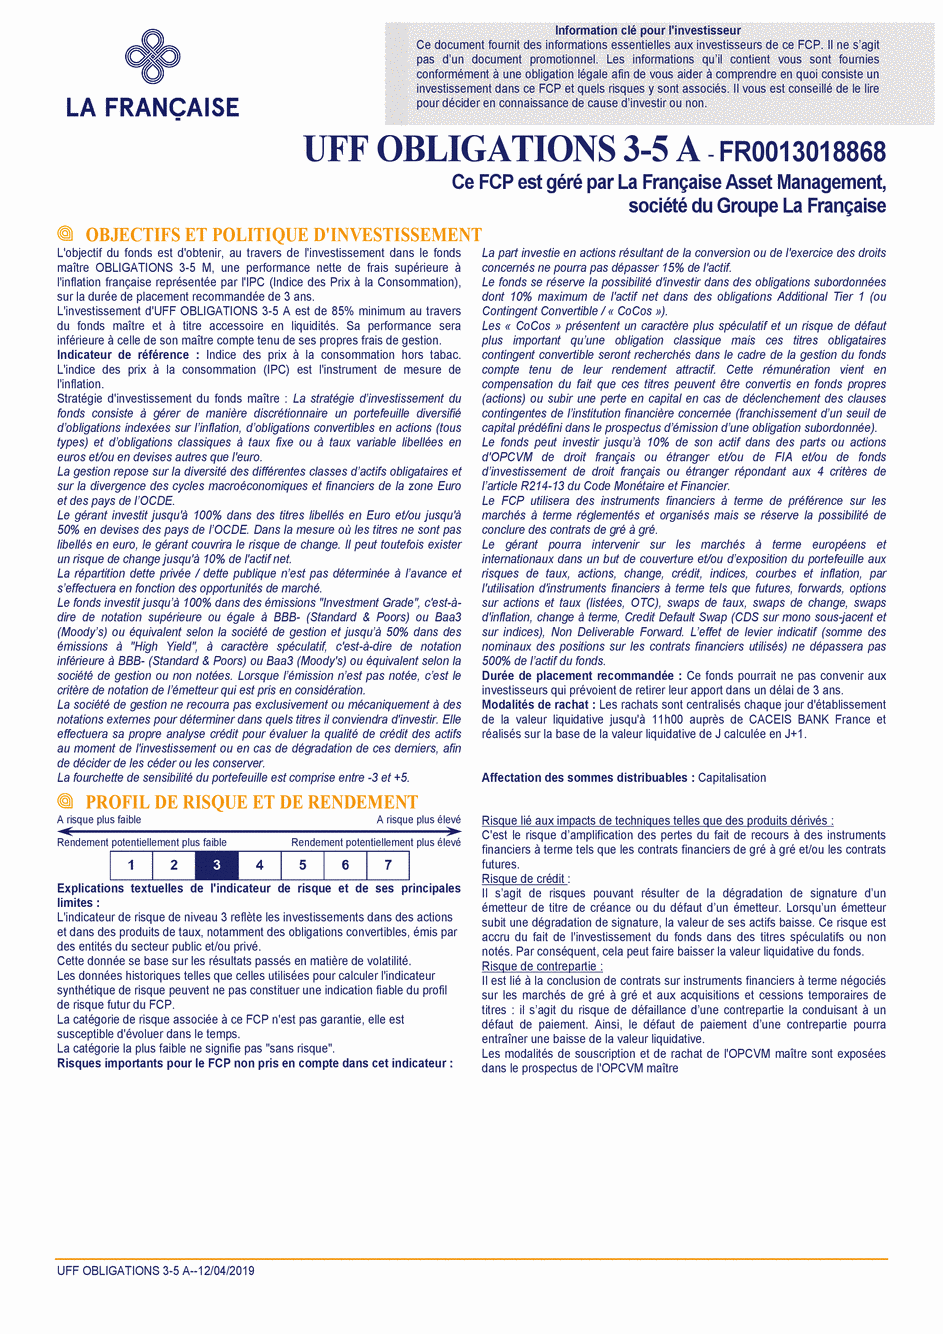 DICI UFF Obligations 3-5 A - 13/02/2019 - Français